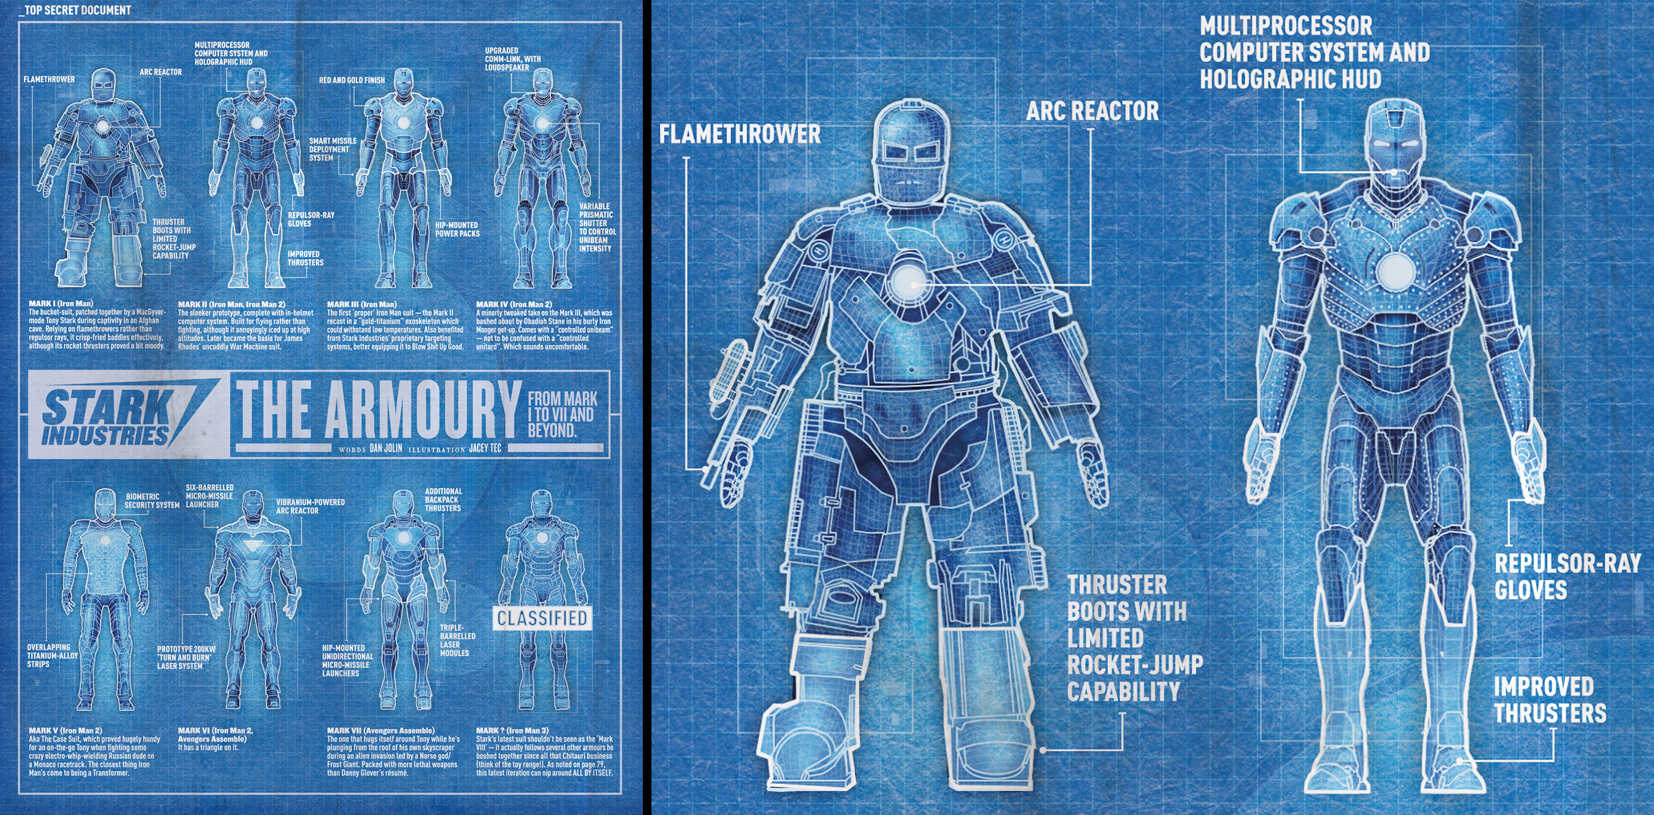 Stark Industries Armoury / Empire Magazine